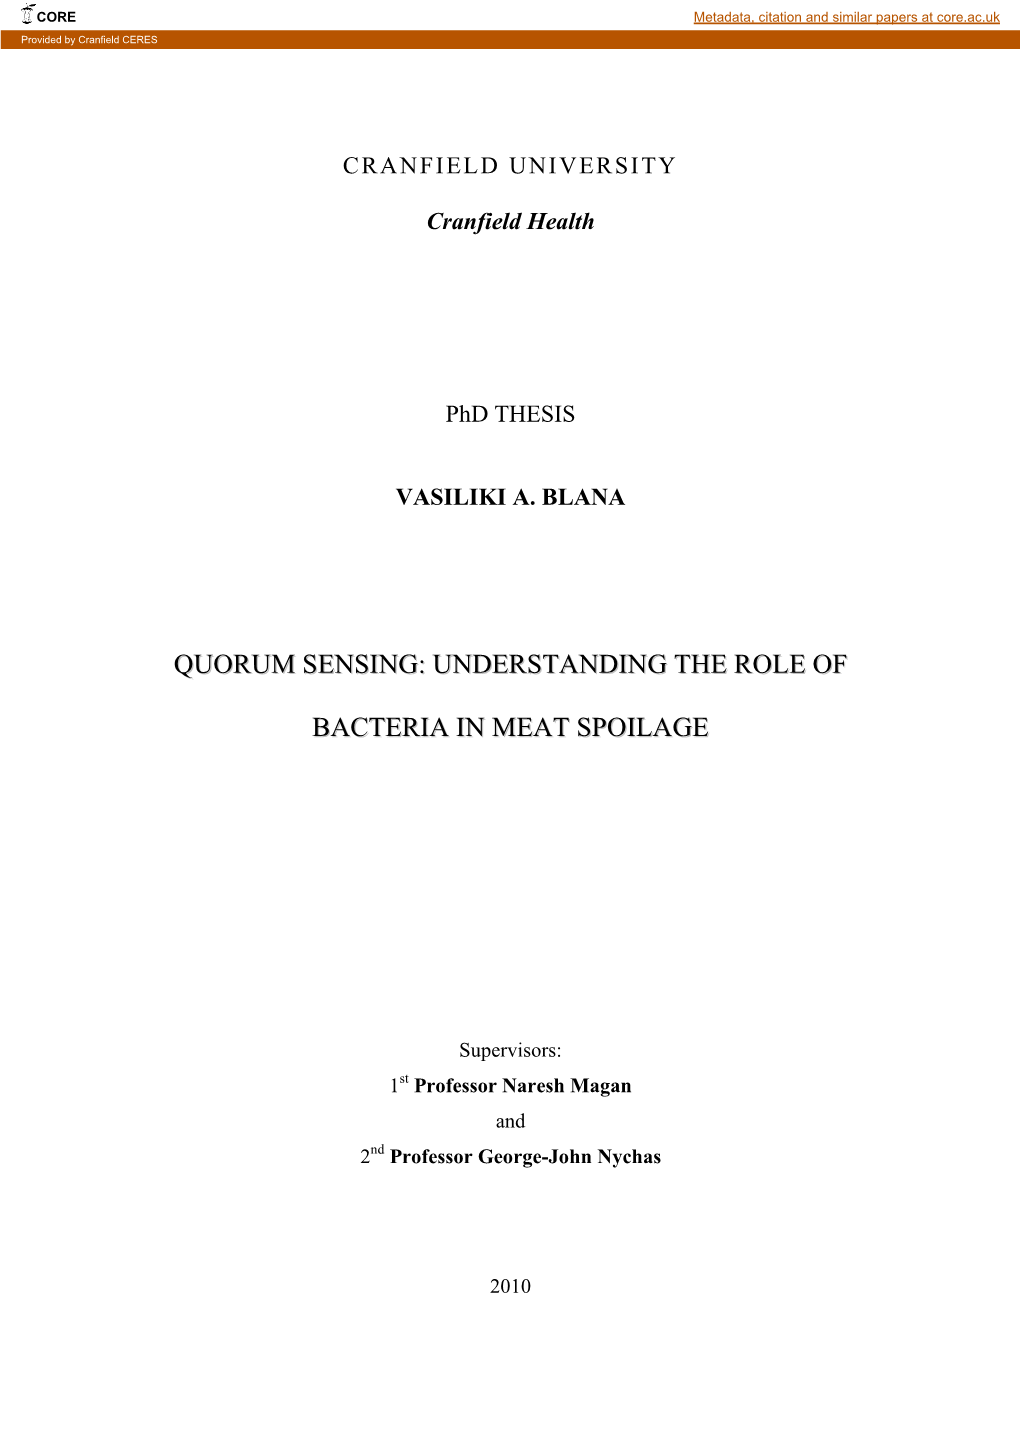 Quorum Sensing: Understanding the Role of Bacteria in Meat Spoilage